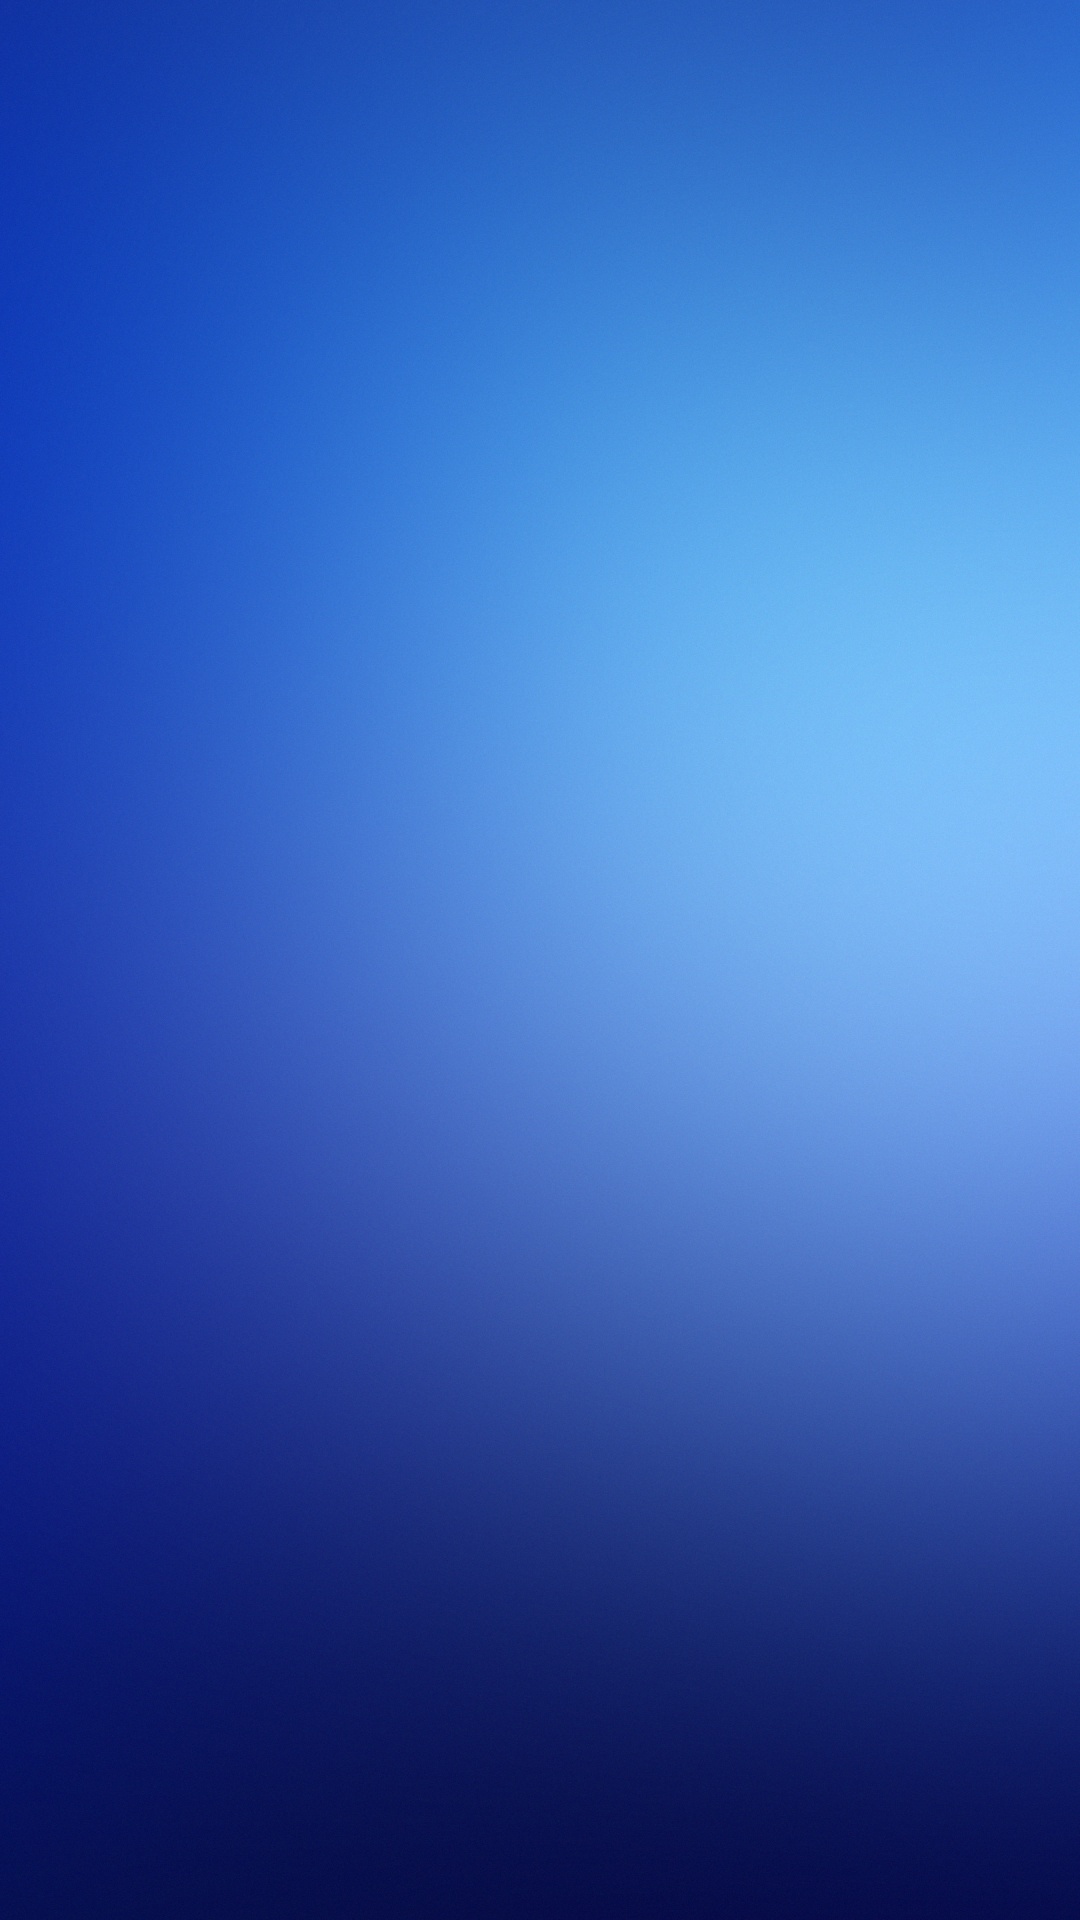 Blue and White Light Digital Wallpaper. Wallpaper in 1080x1920 Resolution